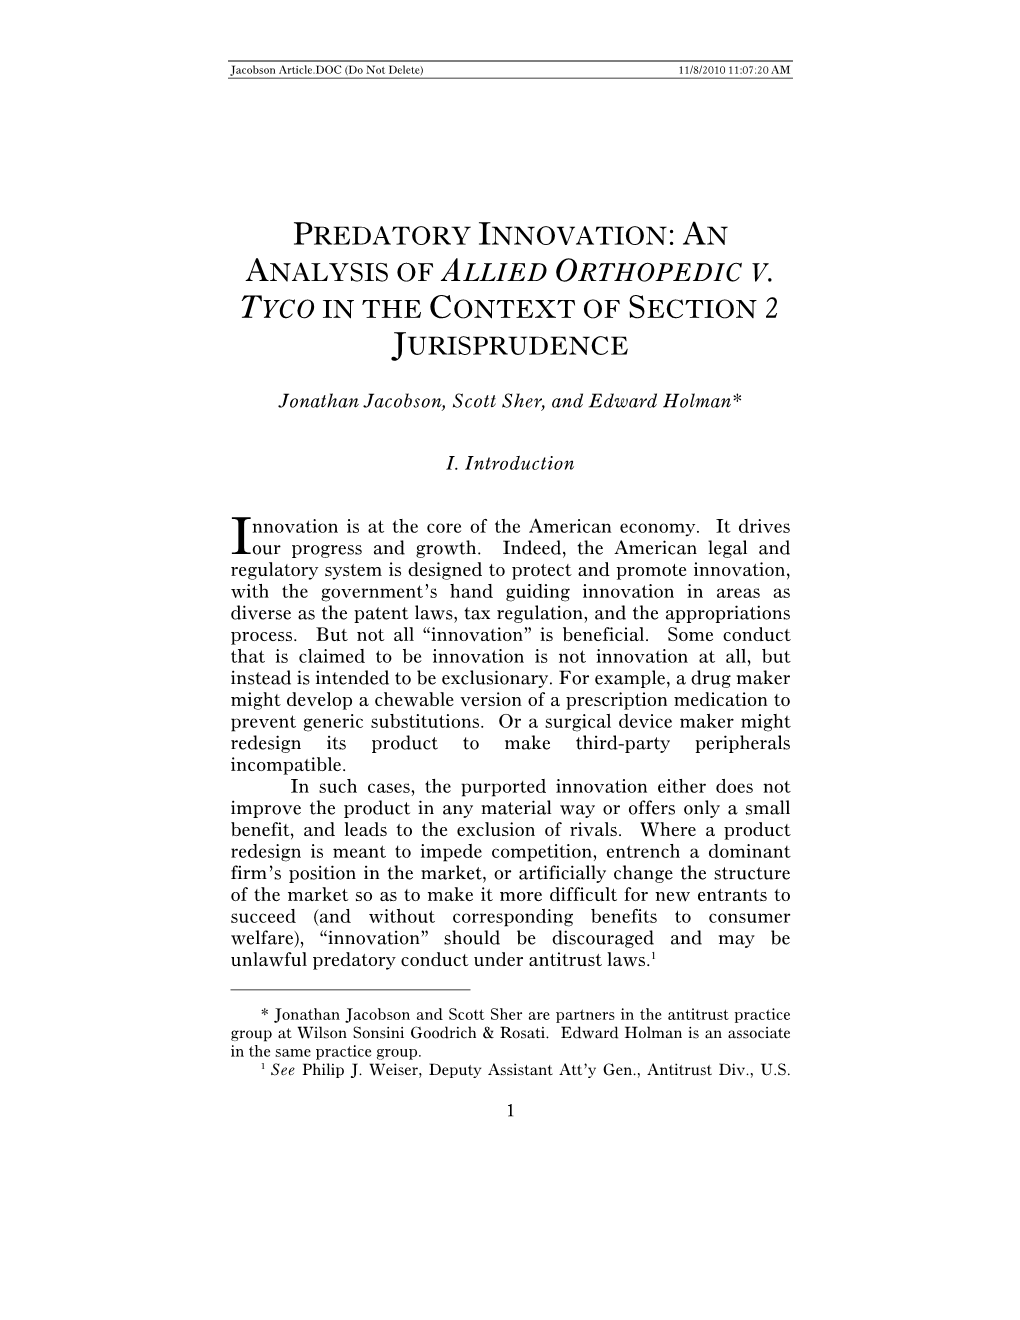 Predatory Innovation: an Analysis of Allied Orthopedic V